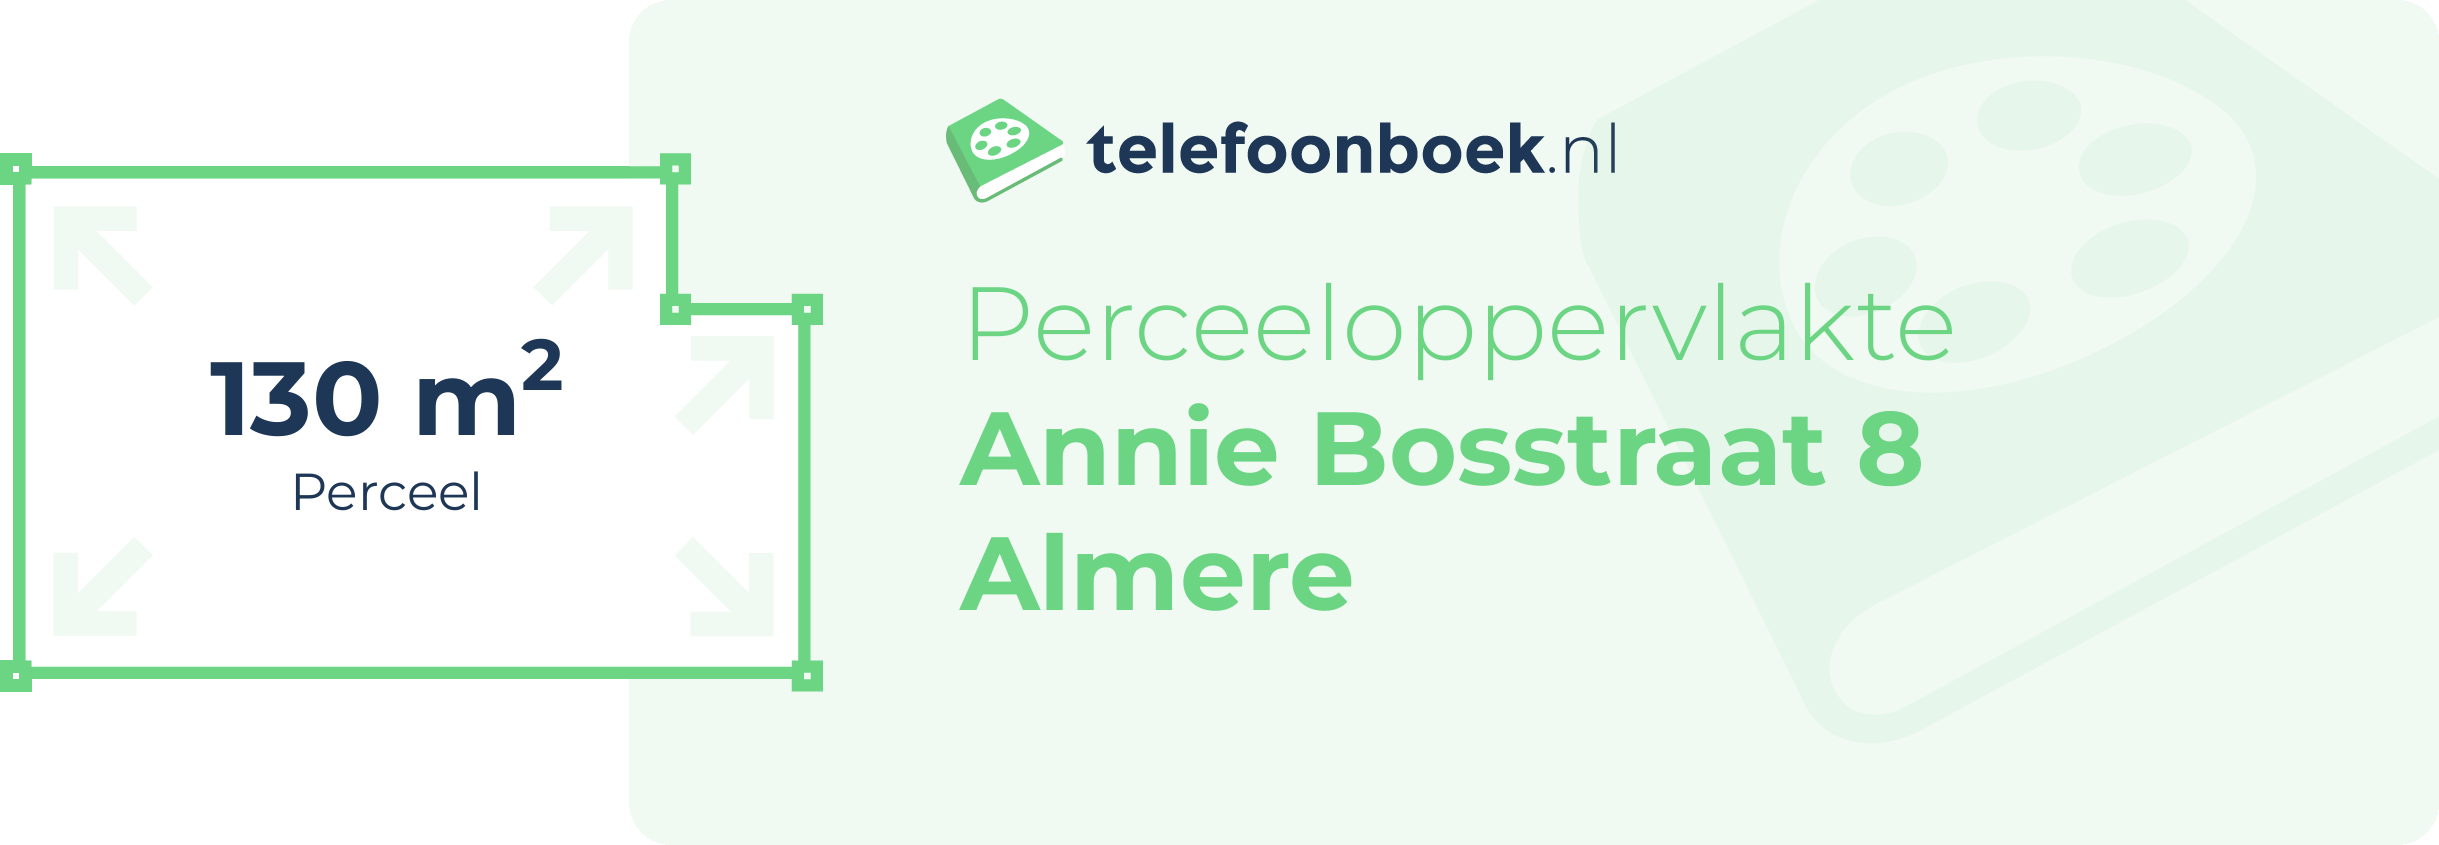 Perceeloppervlakte Annie Bosstraat 8 Almere